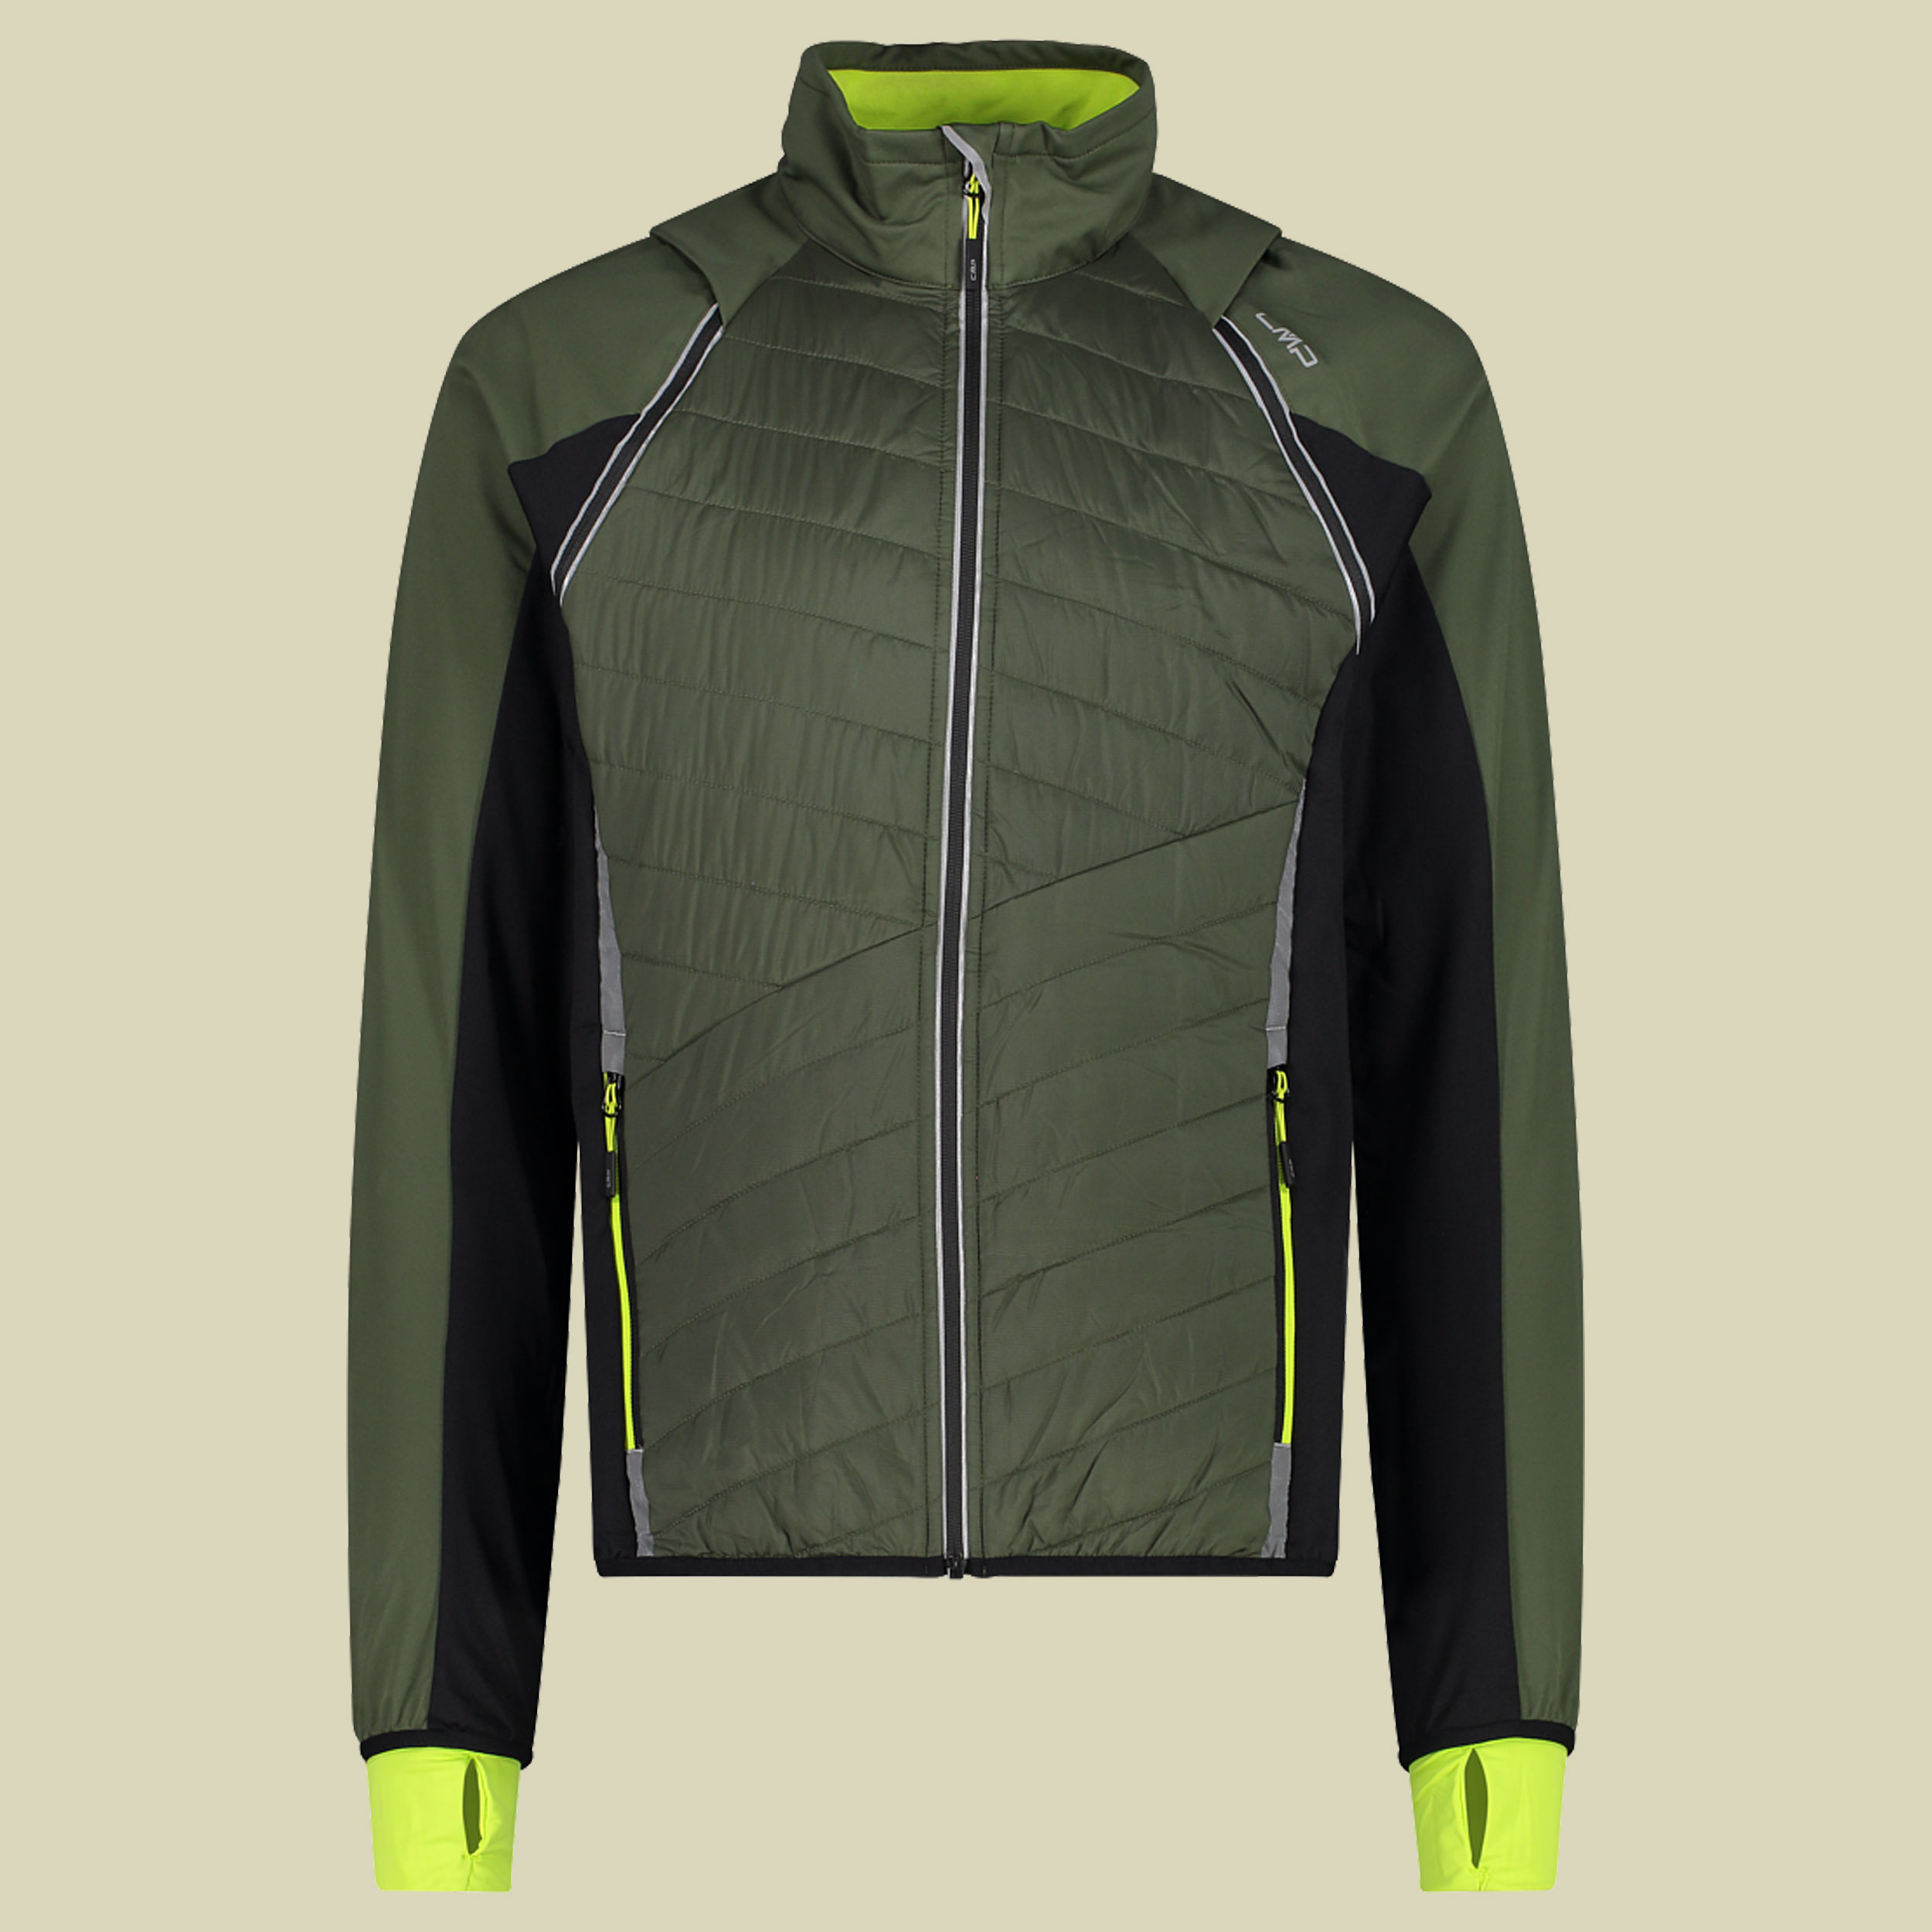 Man Jacket detachable Sleeves 30A2647 Größe 54 Farbe 15EP oil green-nero